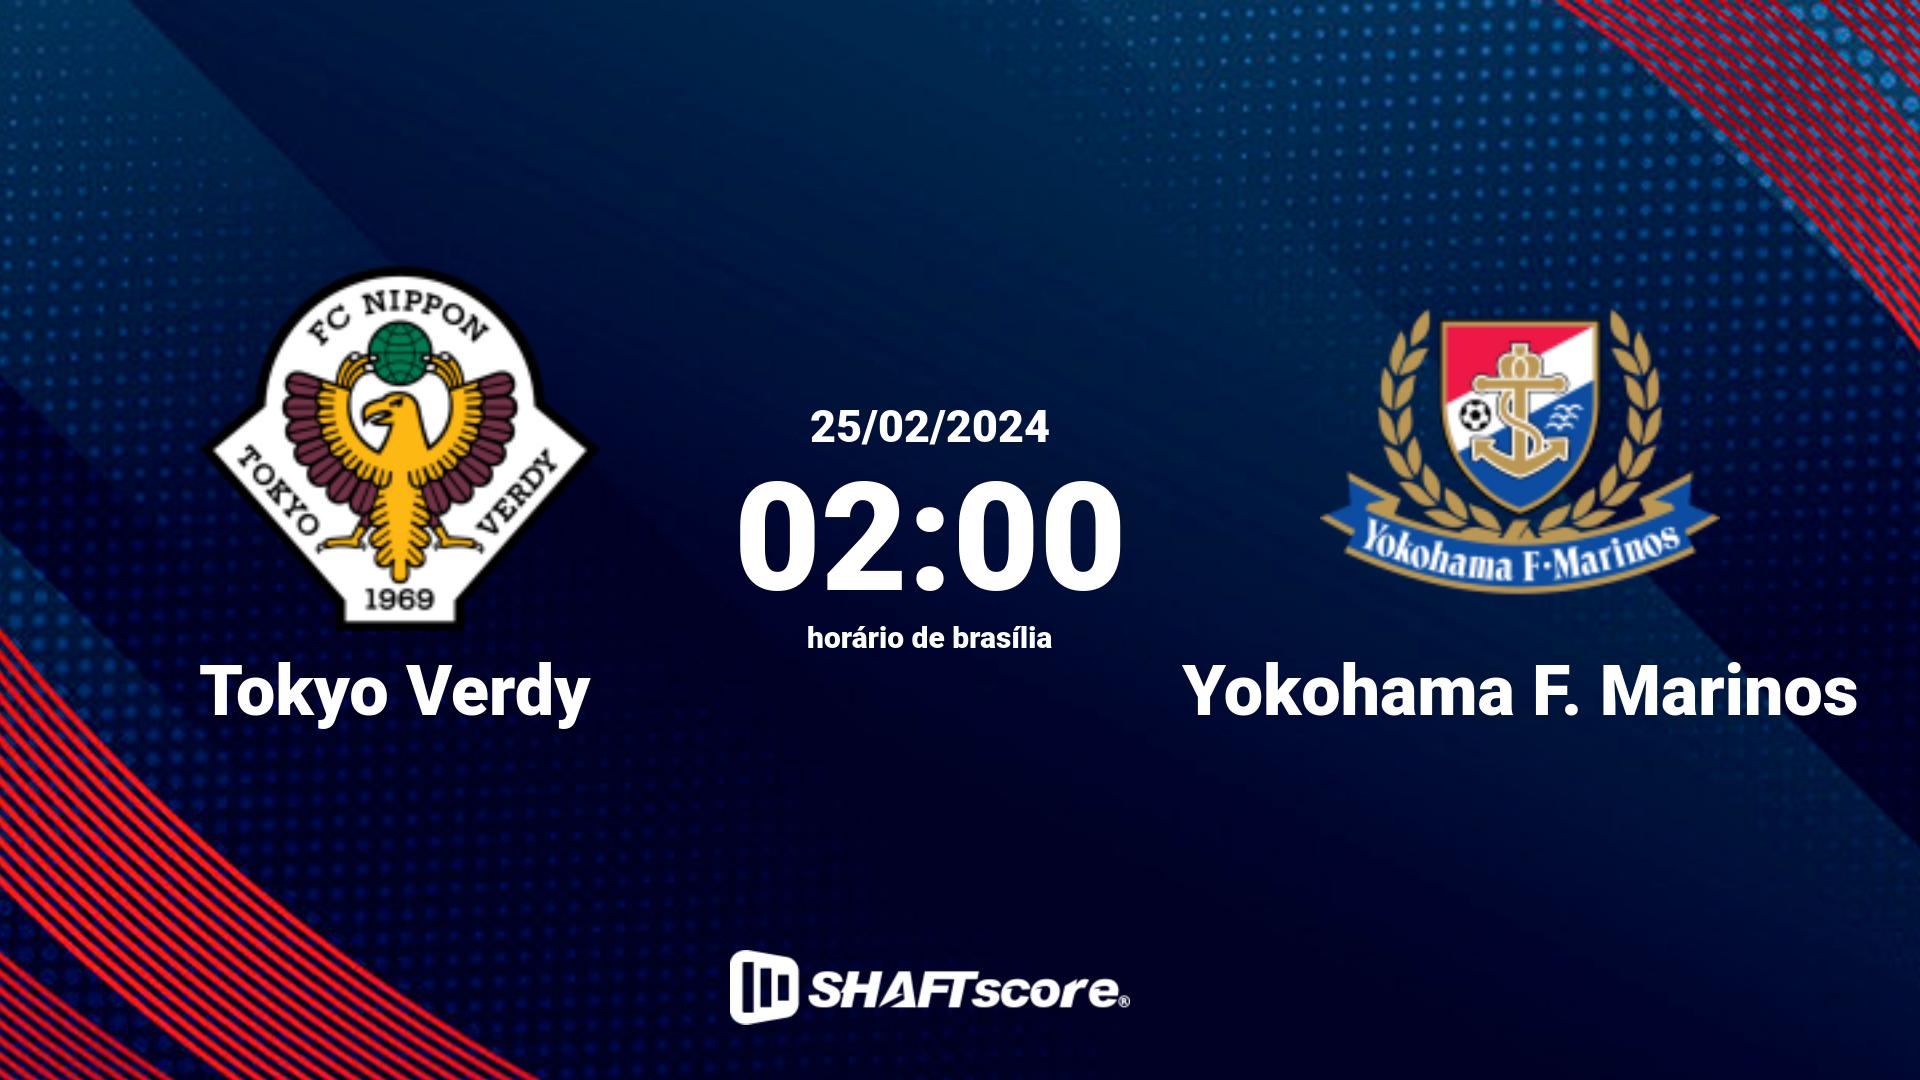 Estatísticas do jogo Tokyo Verdy vs Yokohama F. Marinos 25.02 02:00